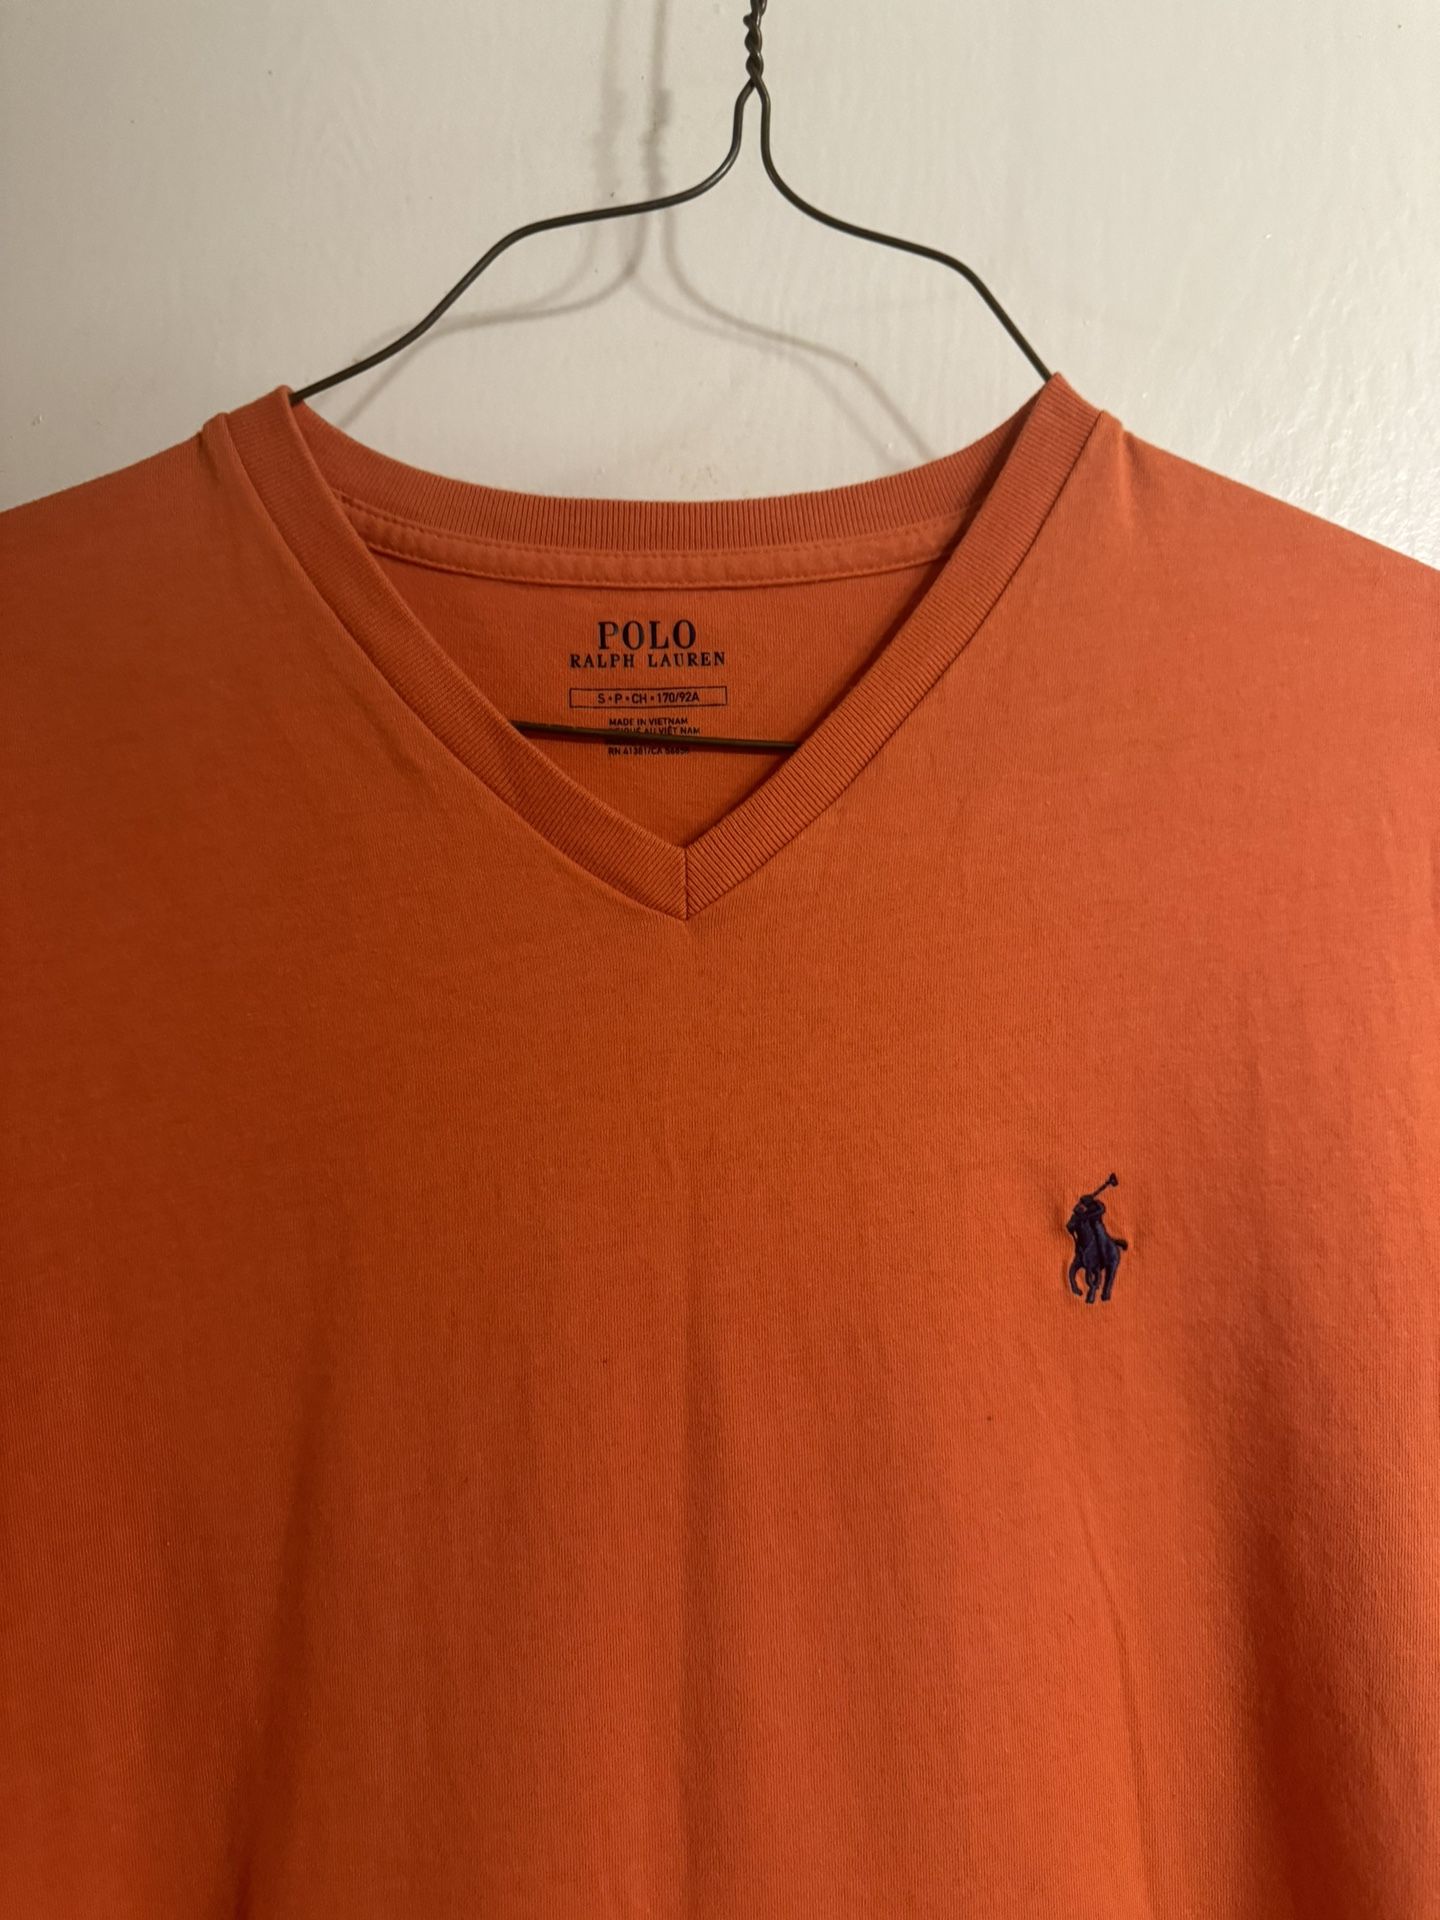 Ralph Lauren Polo Tshirt Size Small 